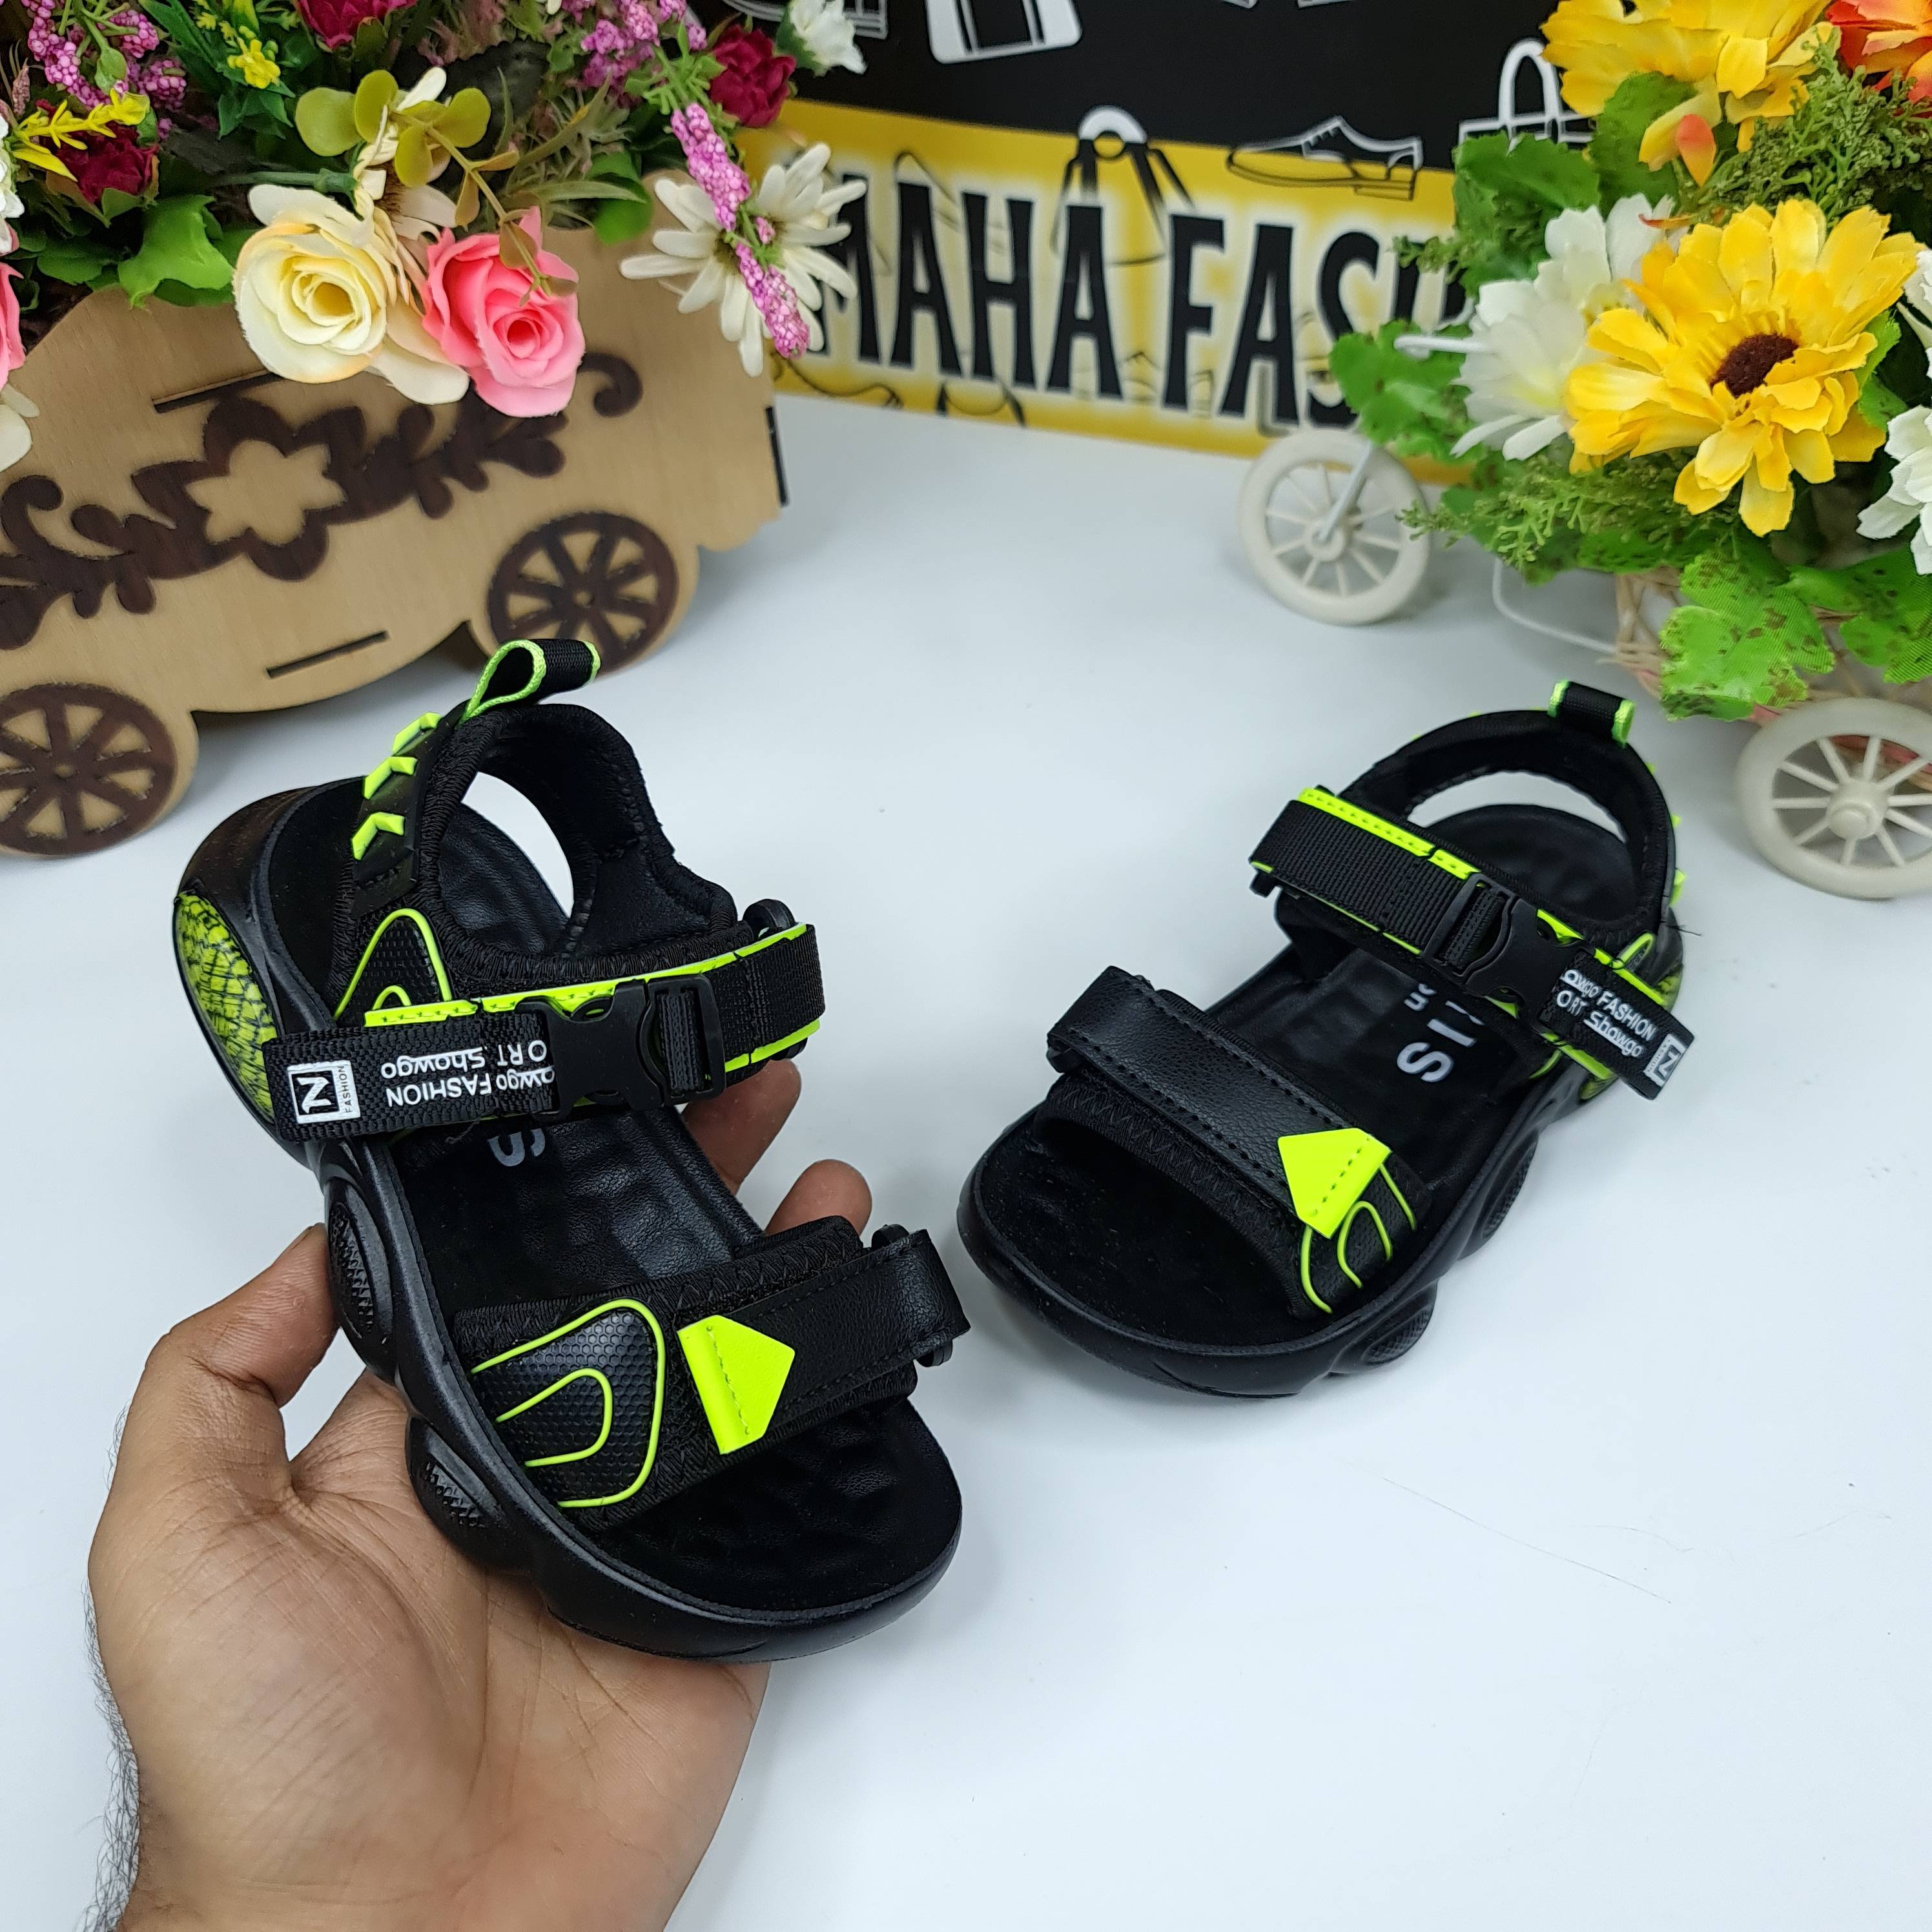 Green Kids Sandals - Maha fashions -  